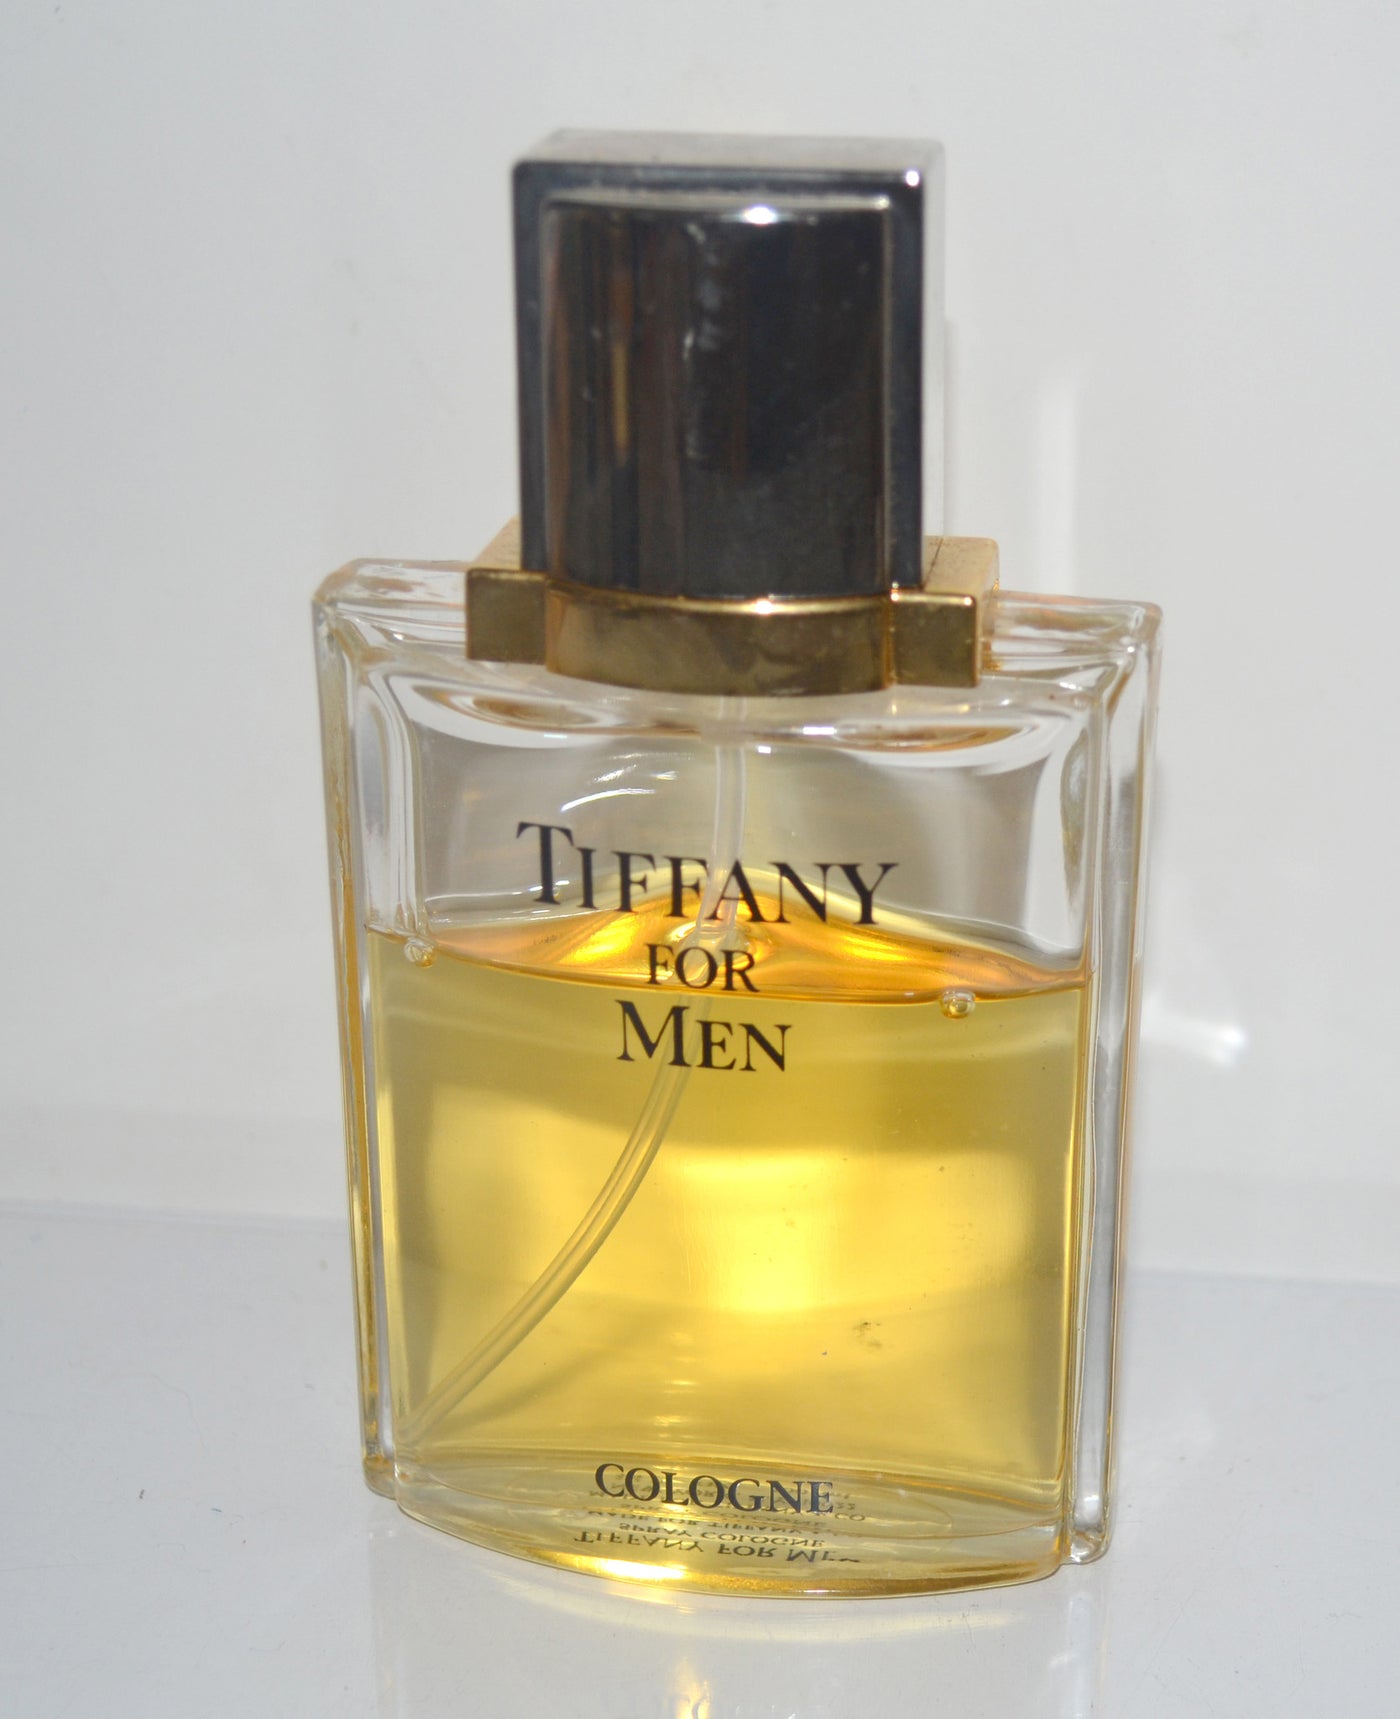 Tiffany For Men Cologne